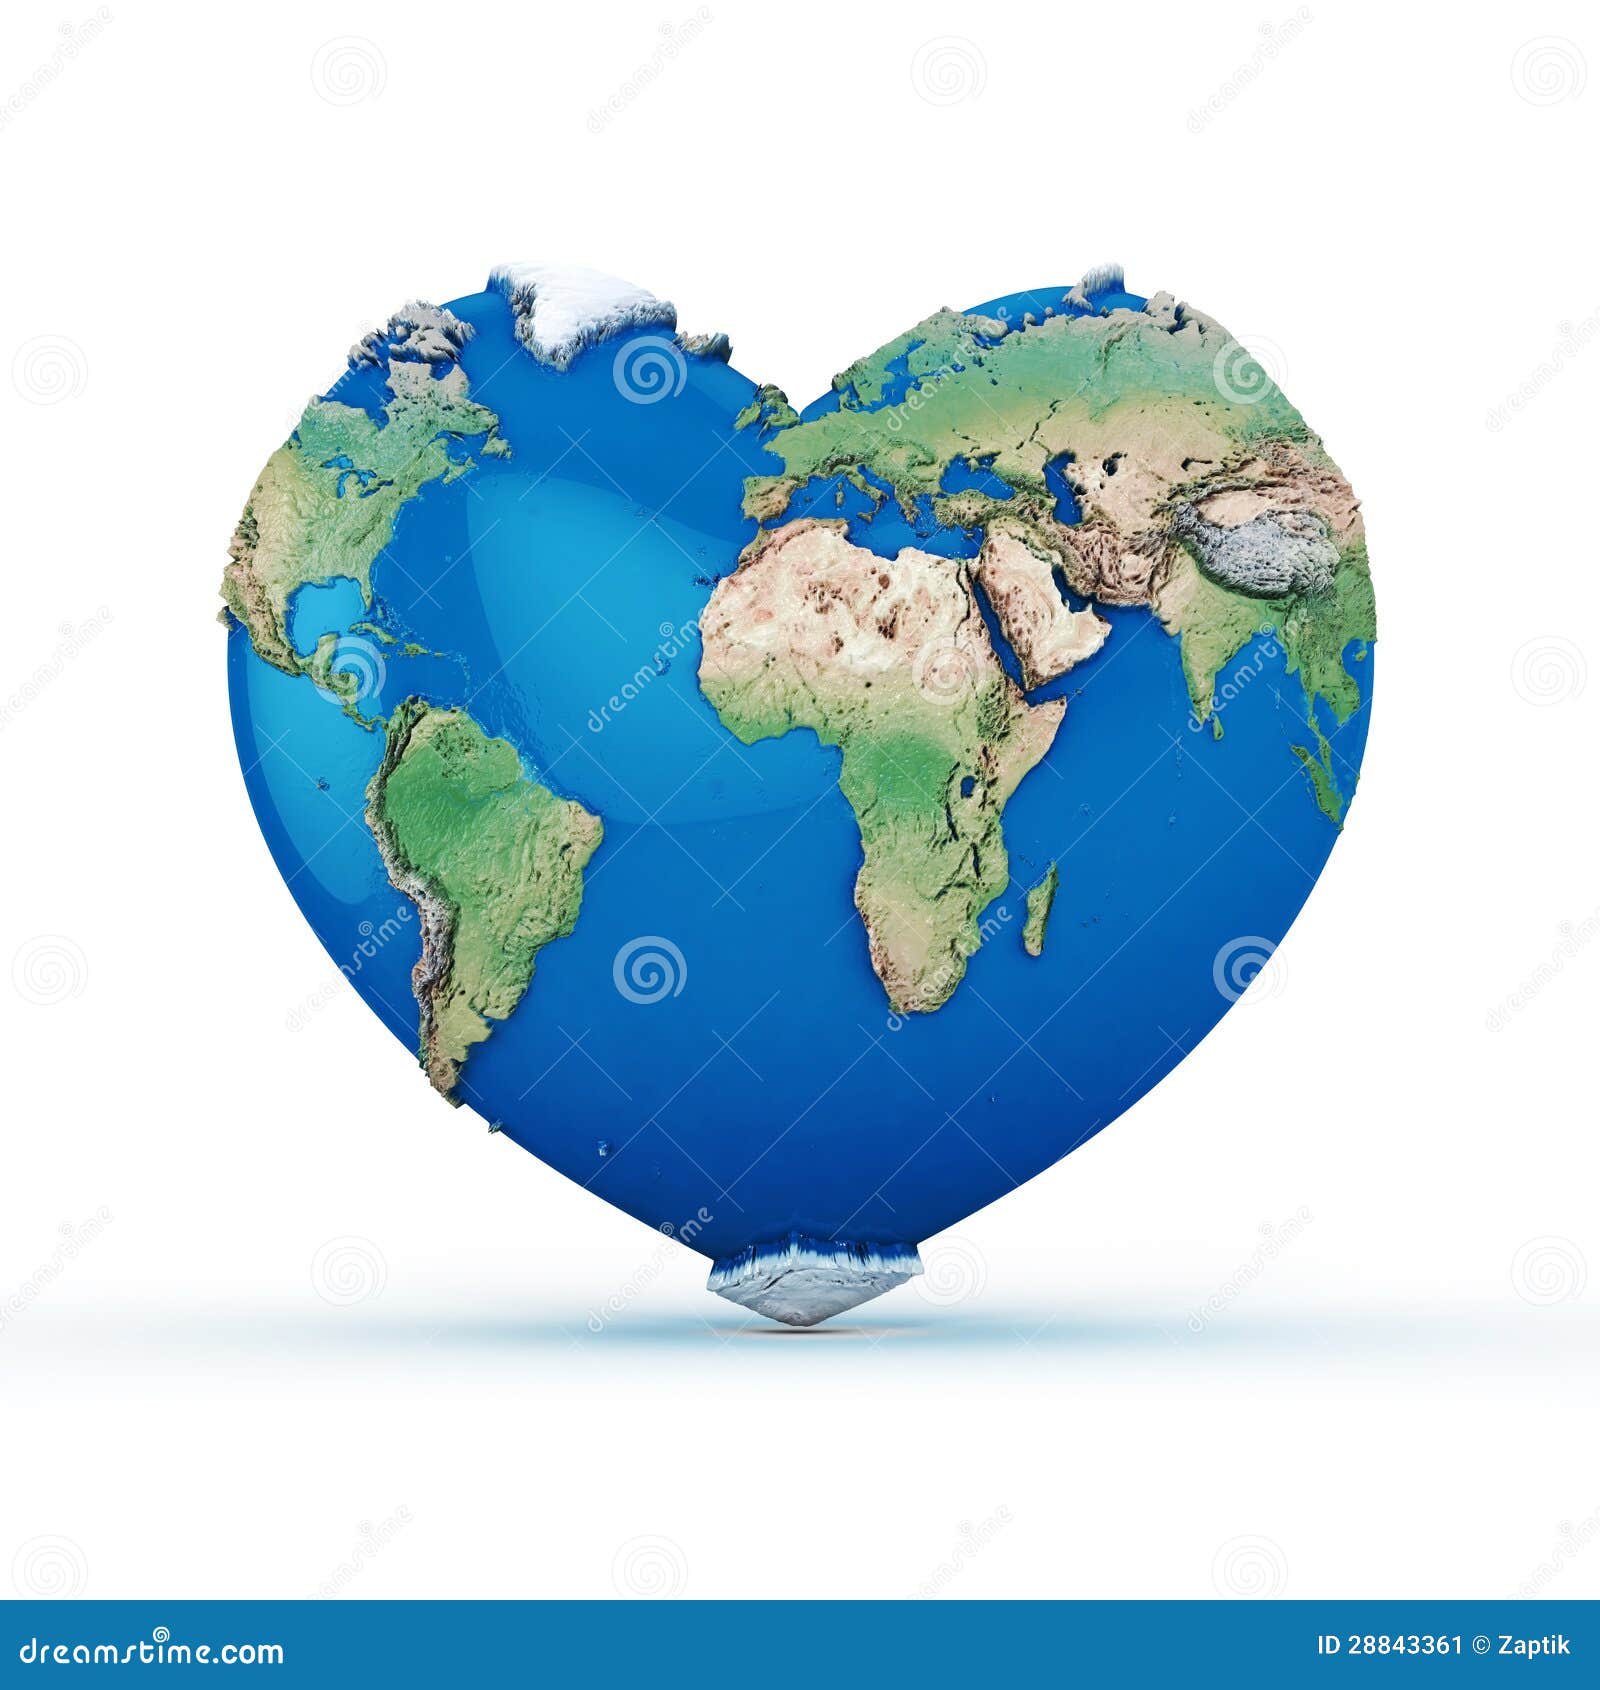 Heart-shaped world stock illustration. Illustration of geography - 28843361